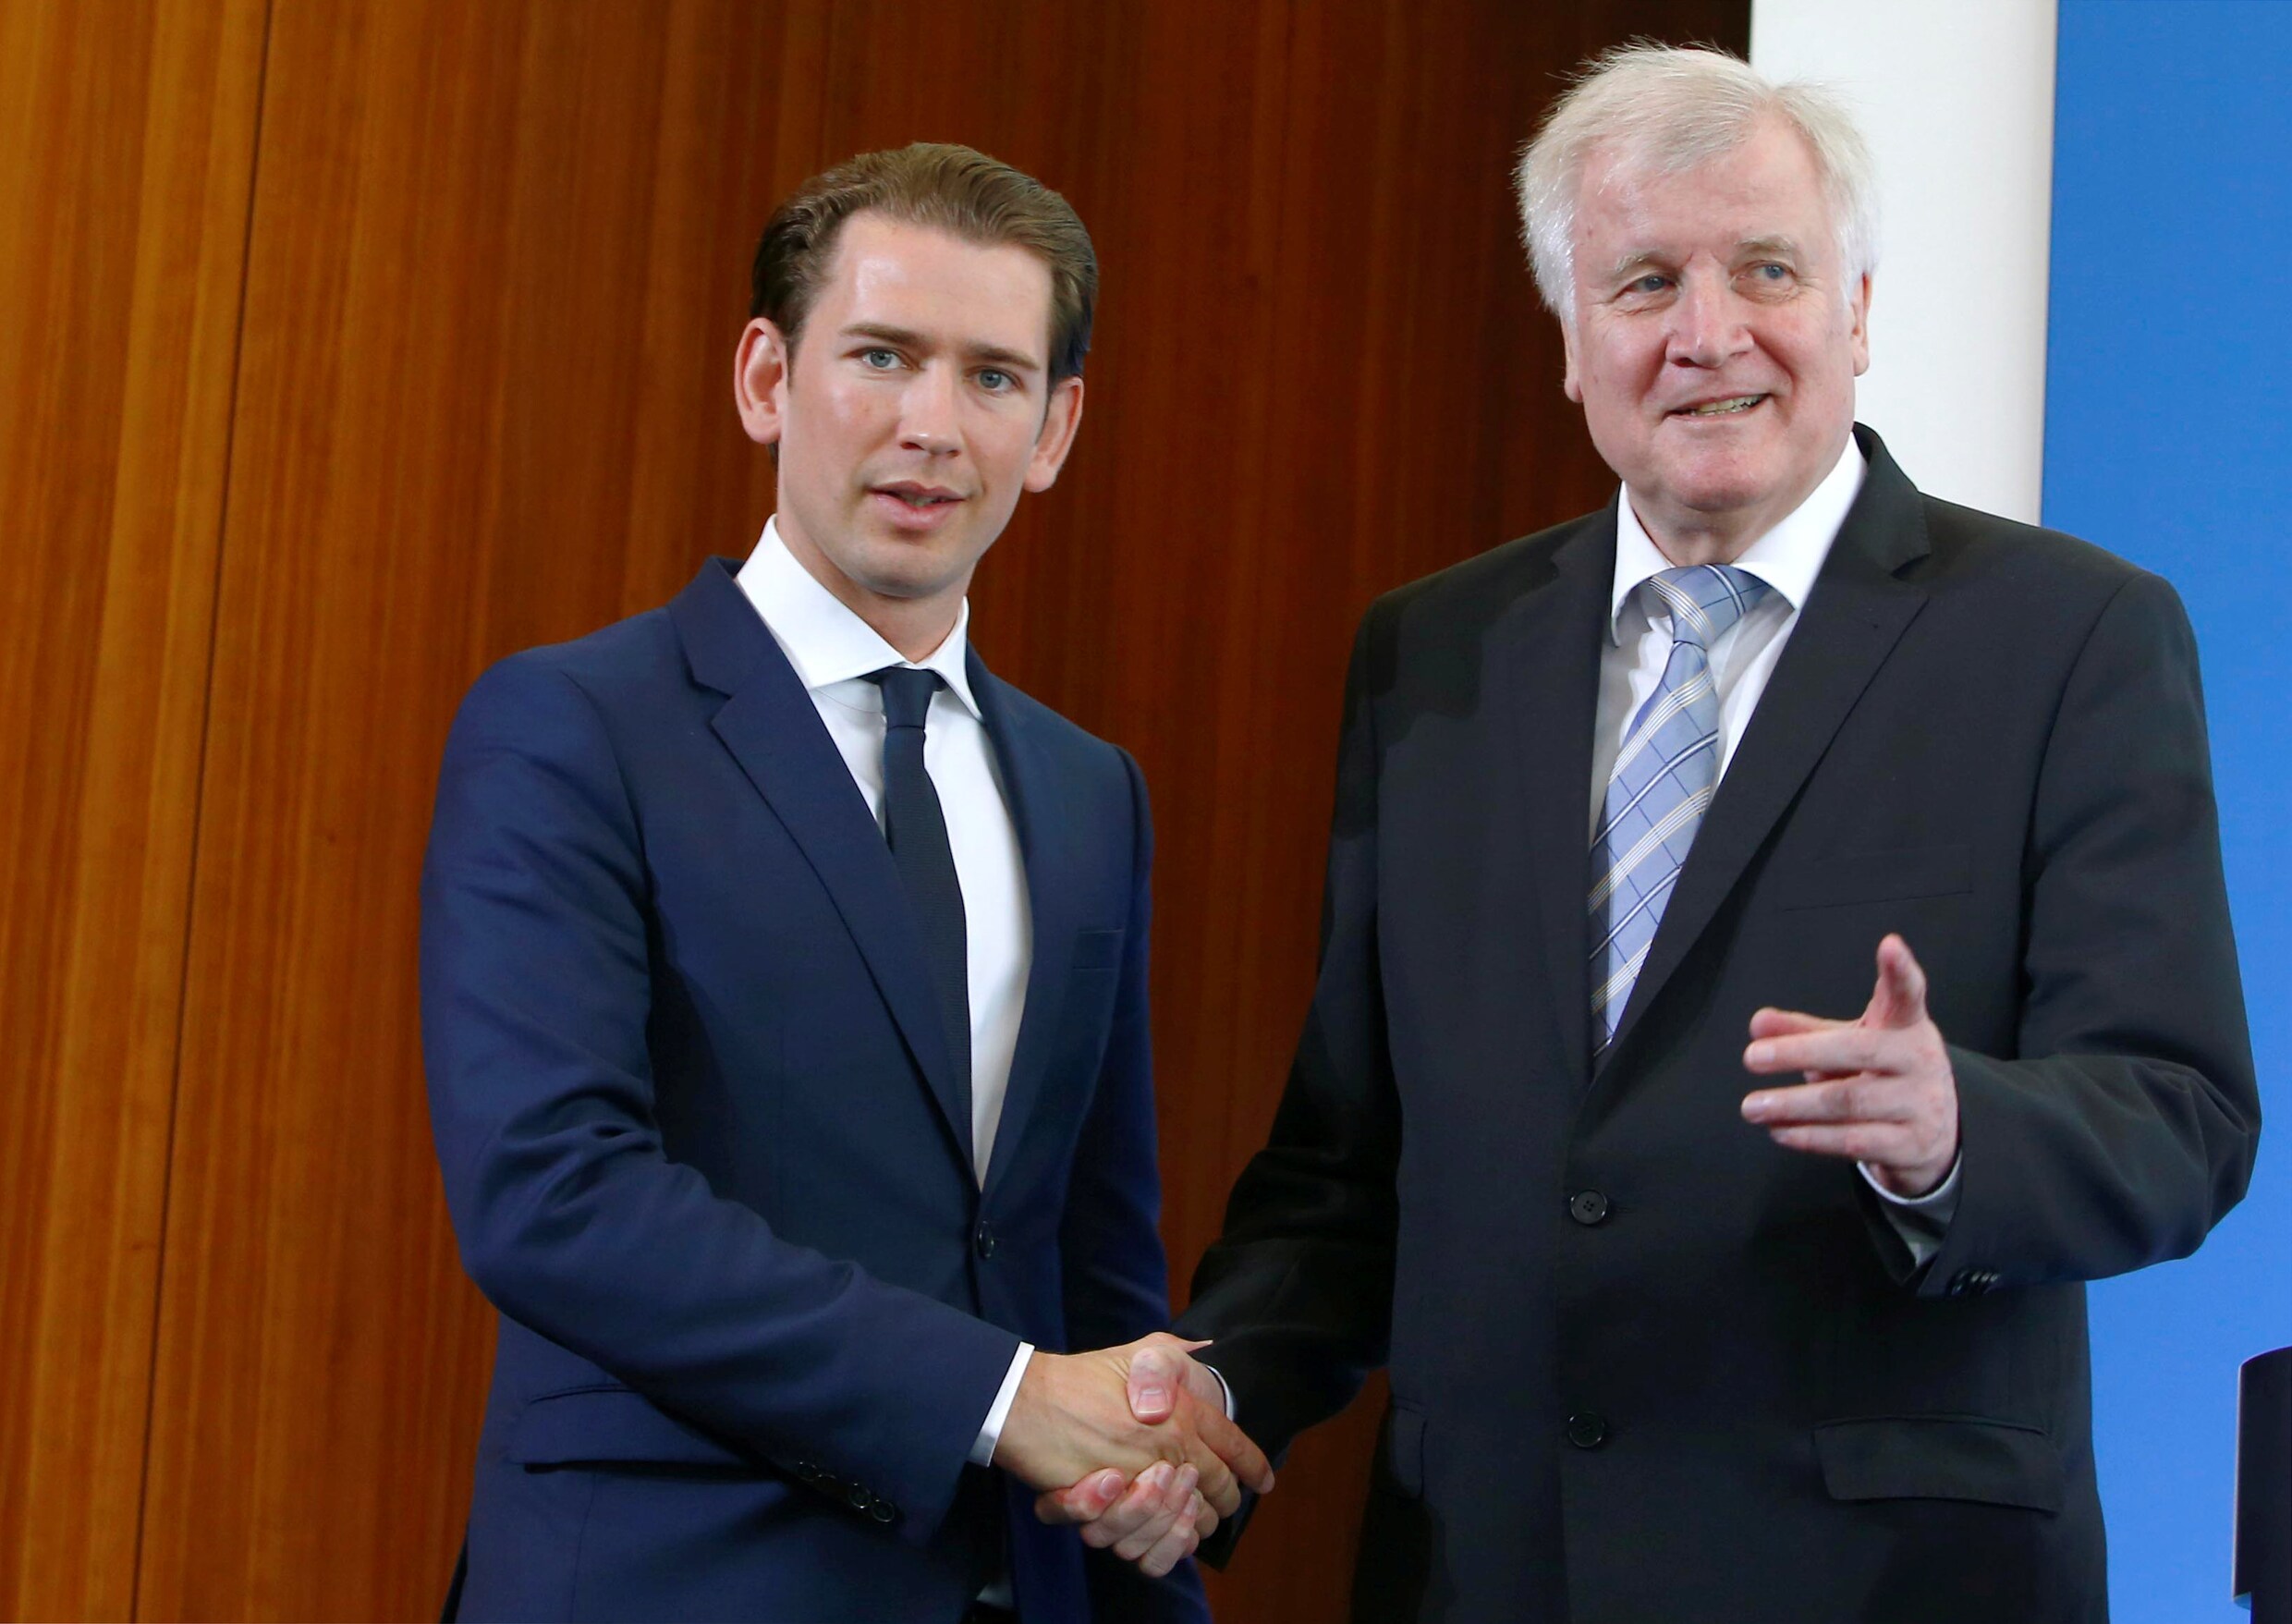 Duitse binnenlandminister Seehofer praat met Oostenrijkse kanselier Kurz